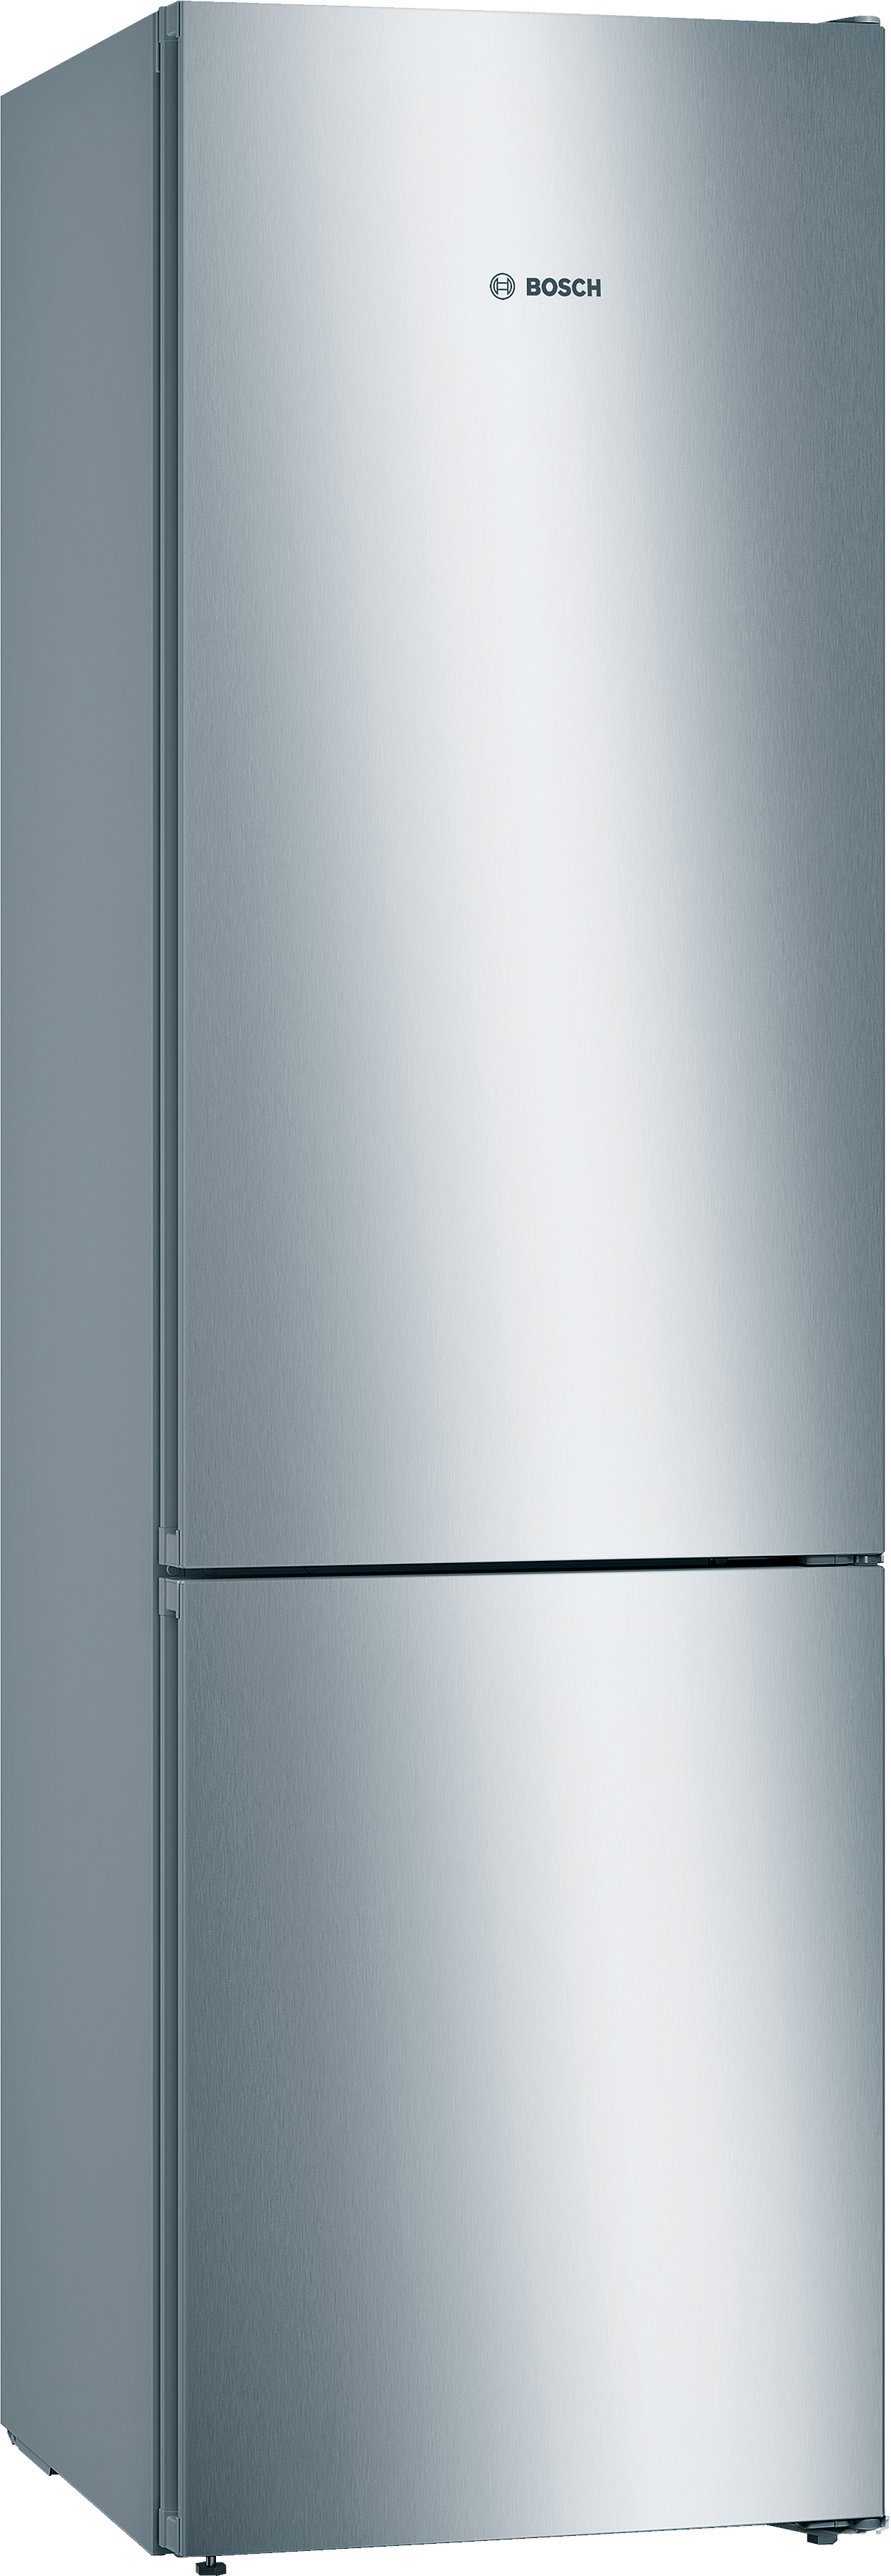 Характеристики холодильник Bosch KGN39VL316